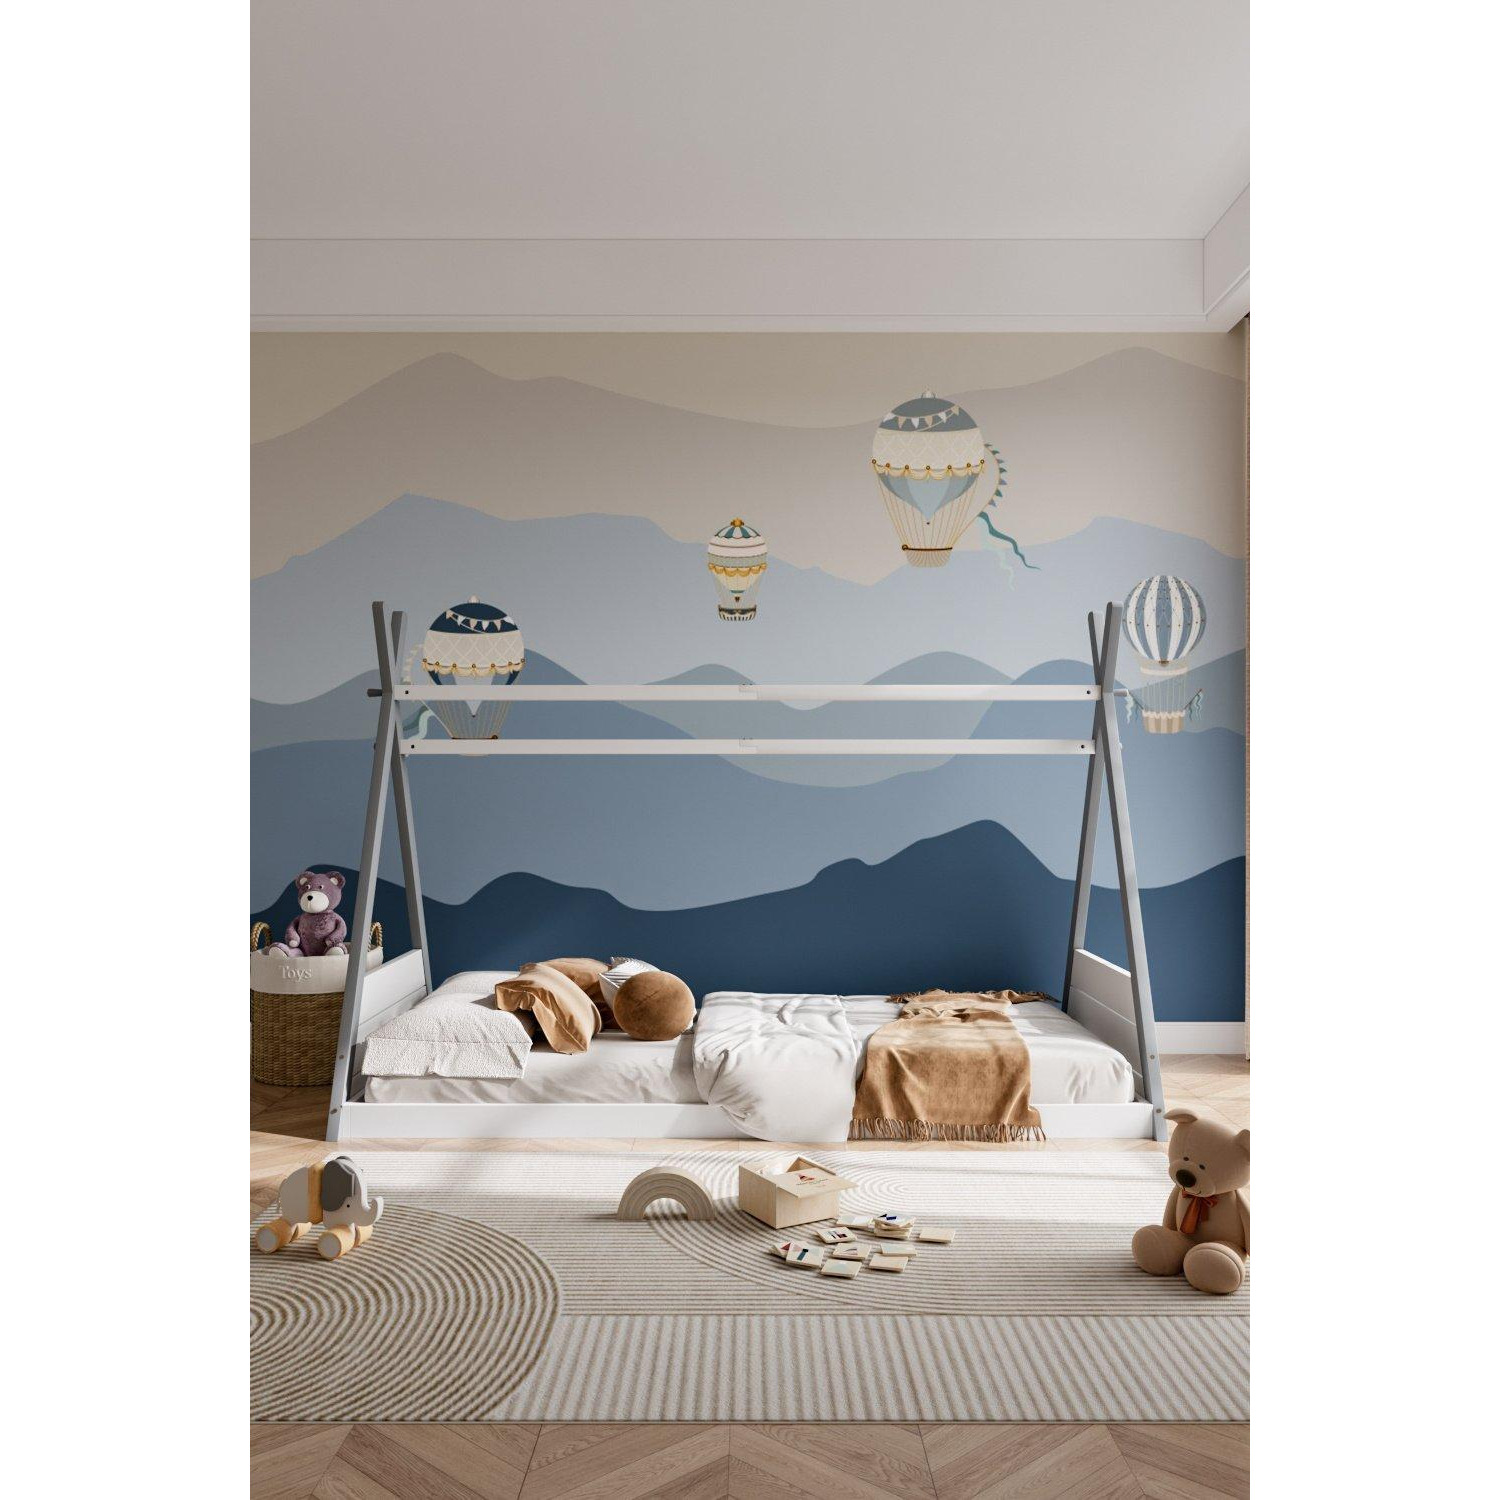 Grey Montessori Children's Floor Bed with White Headboard - image 1